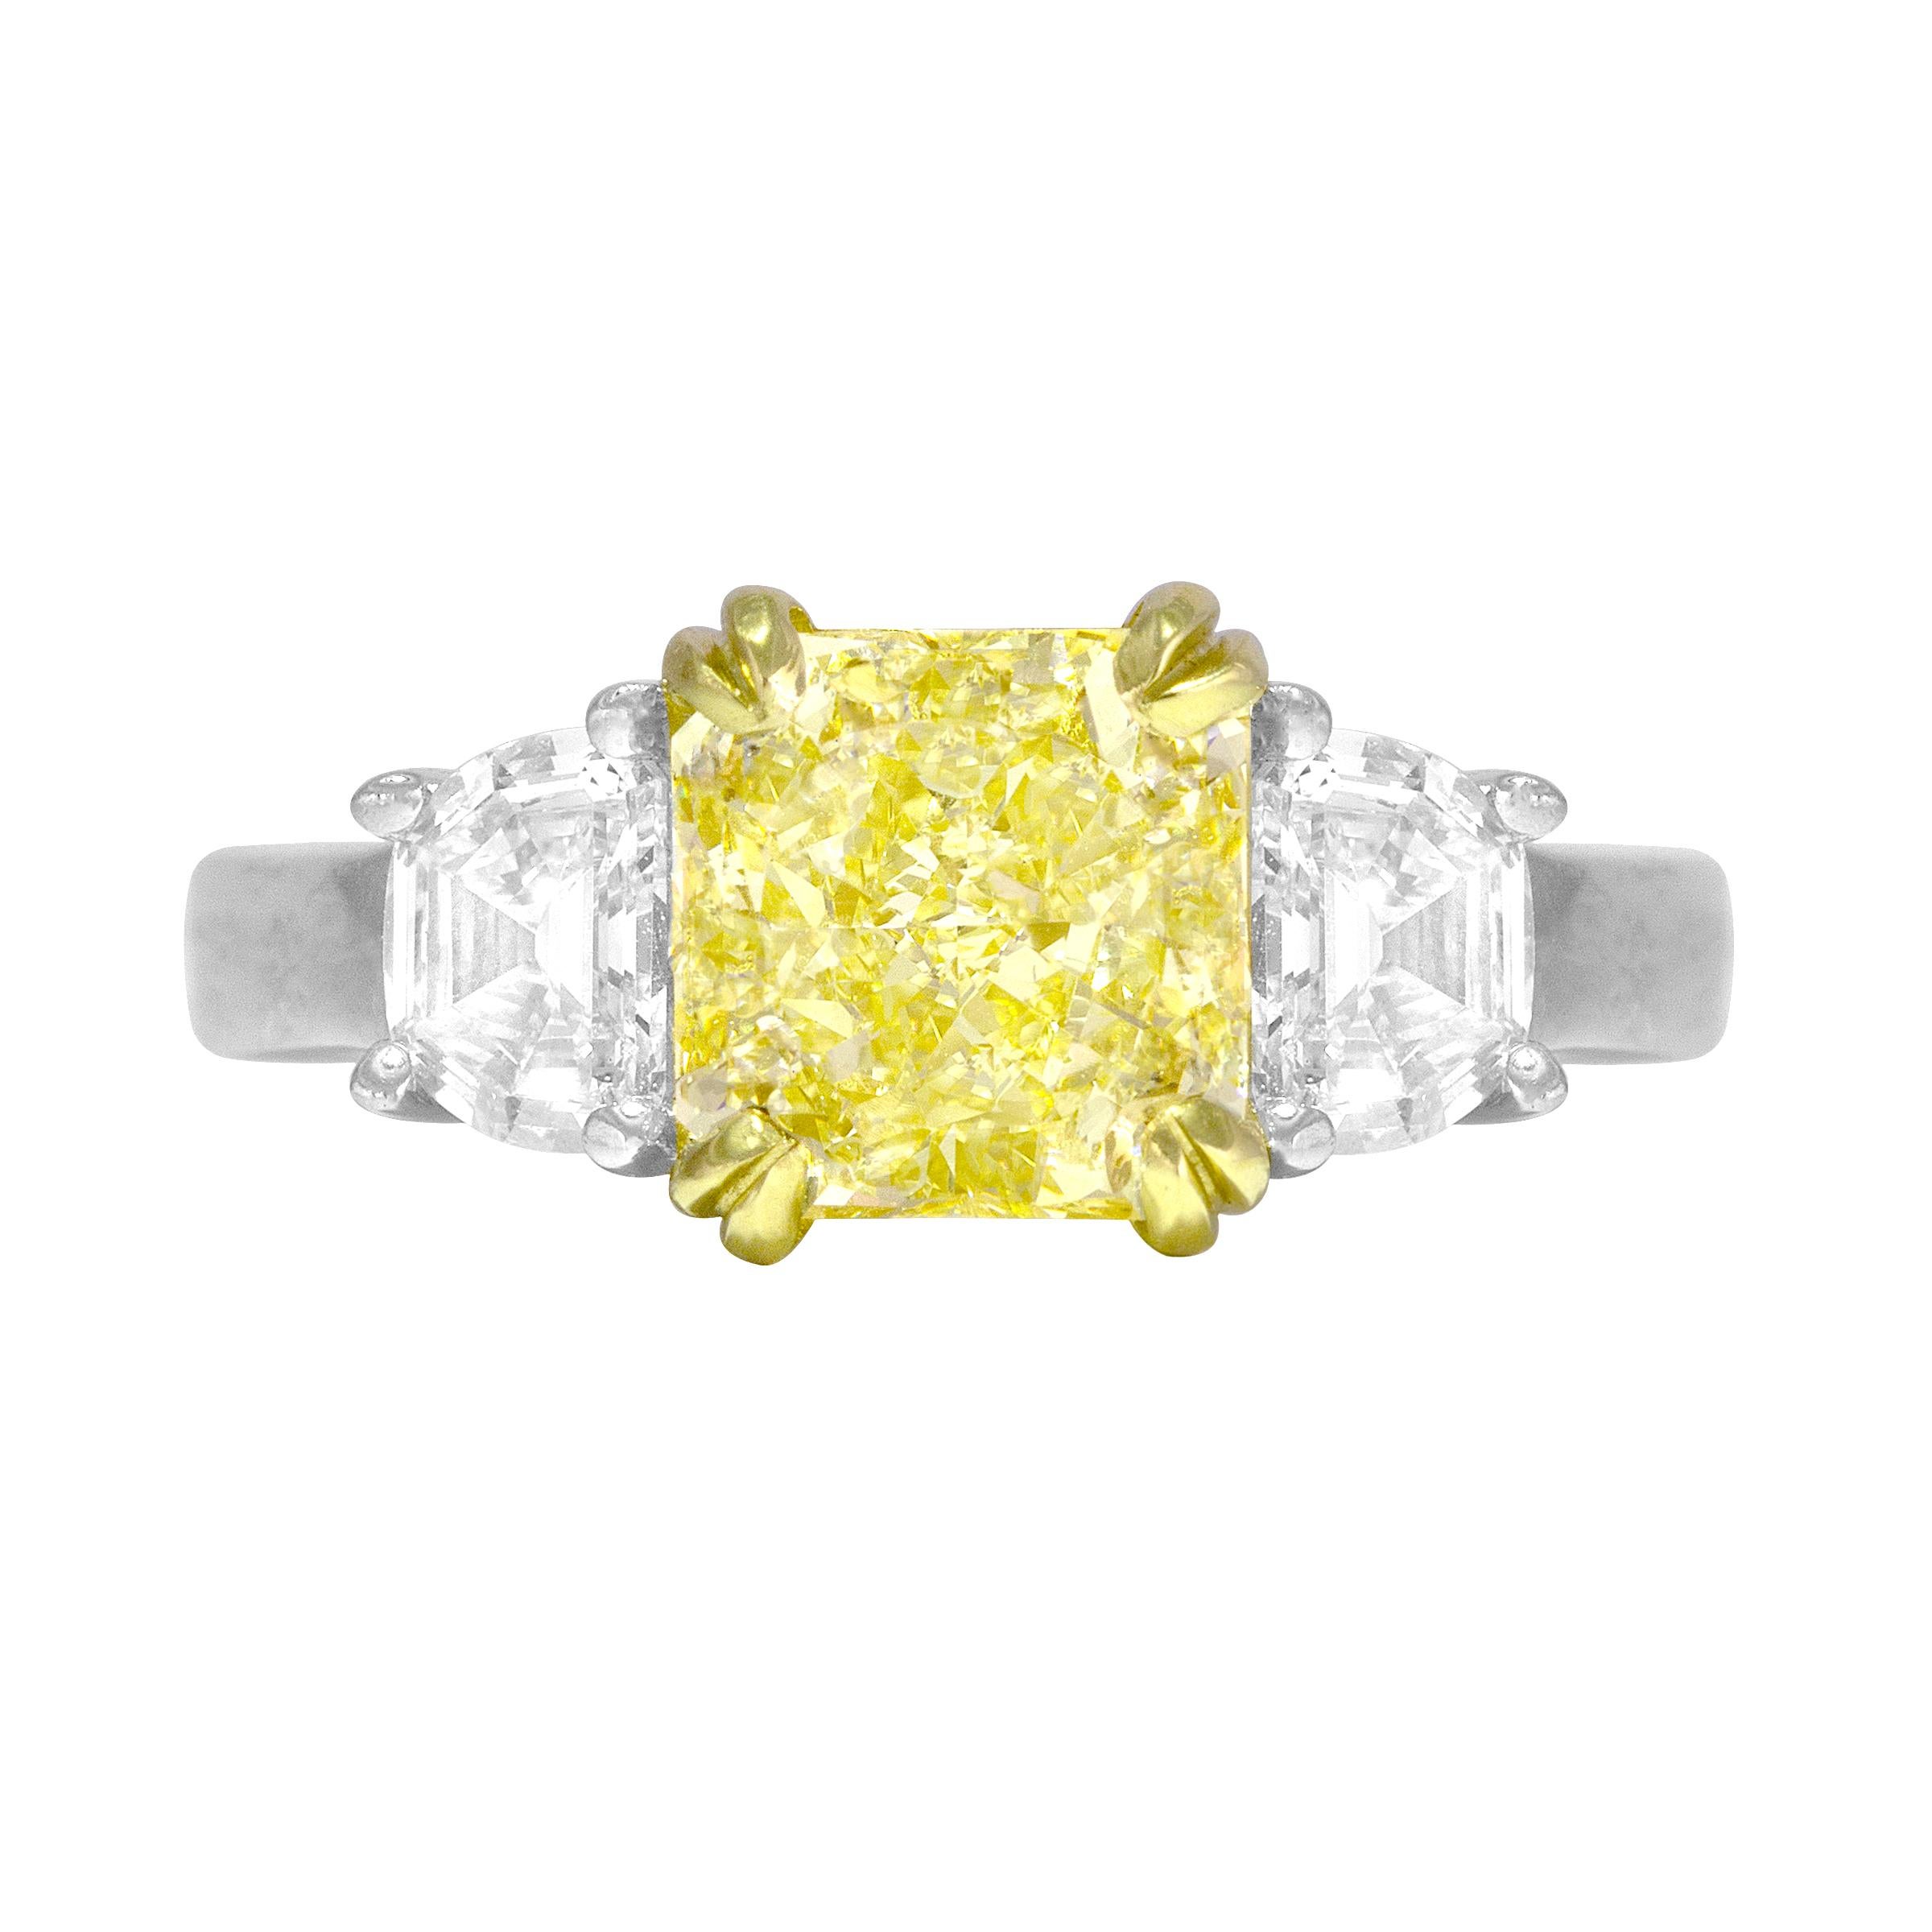 DiamondTown GIA Certified 2.25 Carat Natural Fancy Yellow Diamond Ring